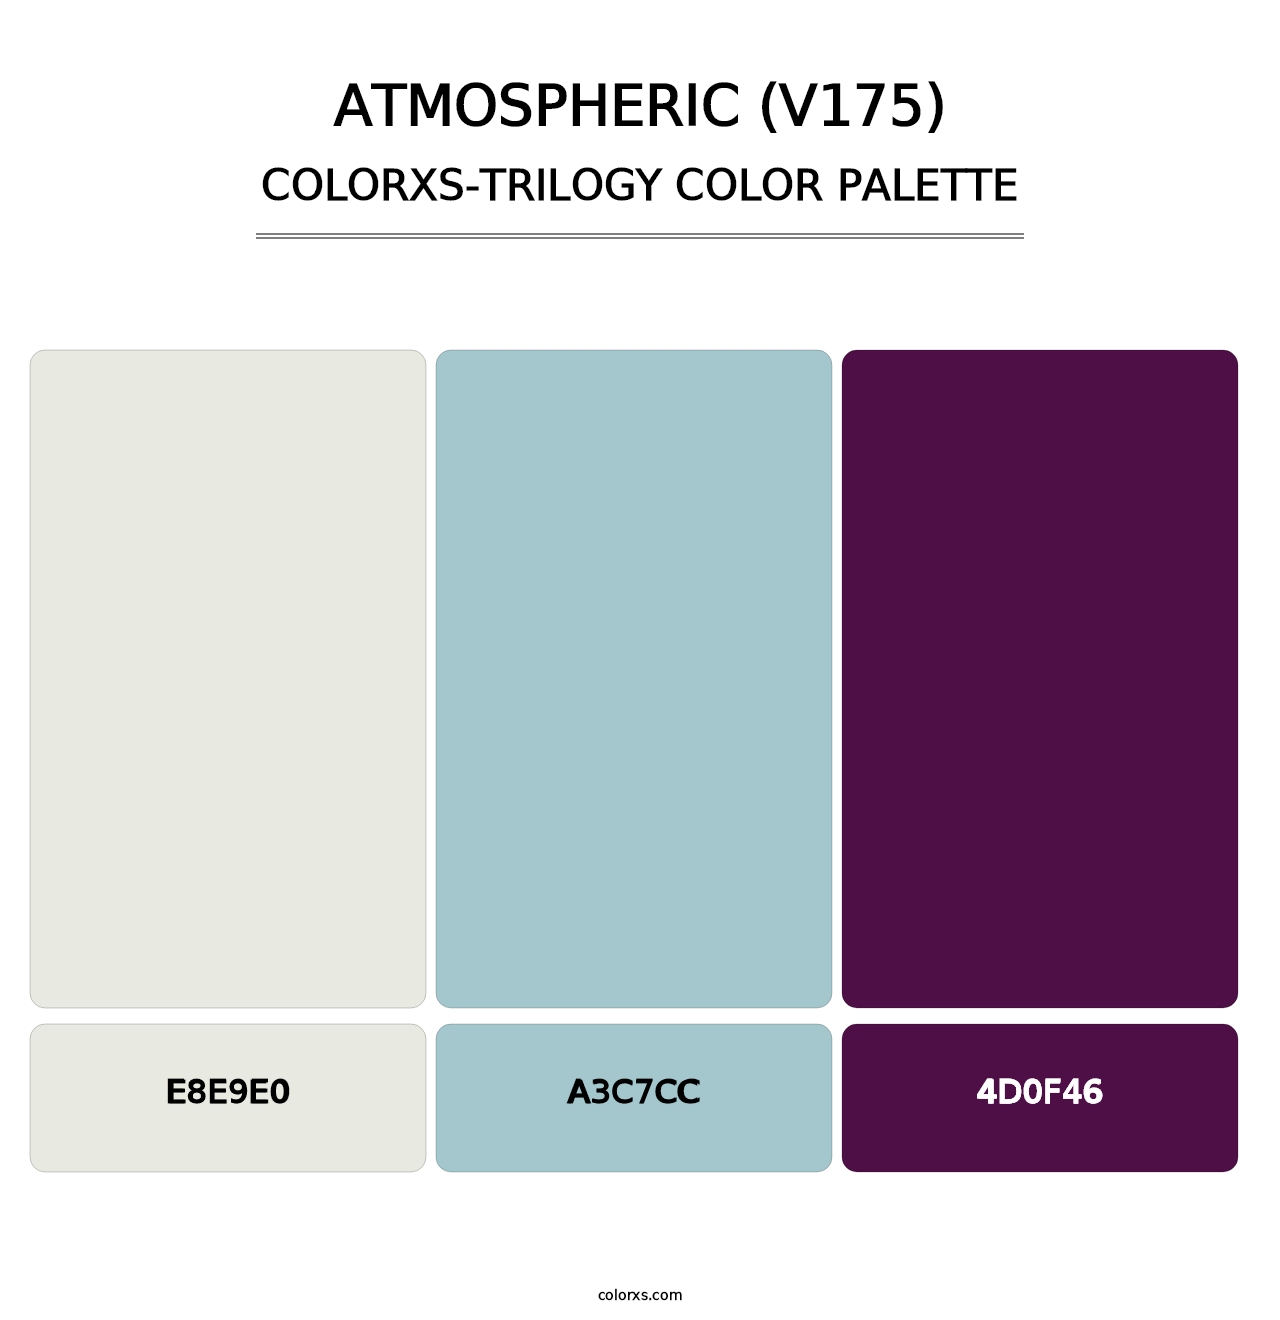 Atmospheric (V175) - Colorxs Trilogy Palette